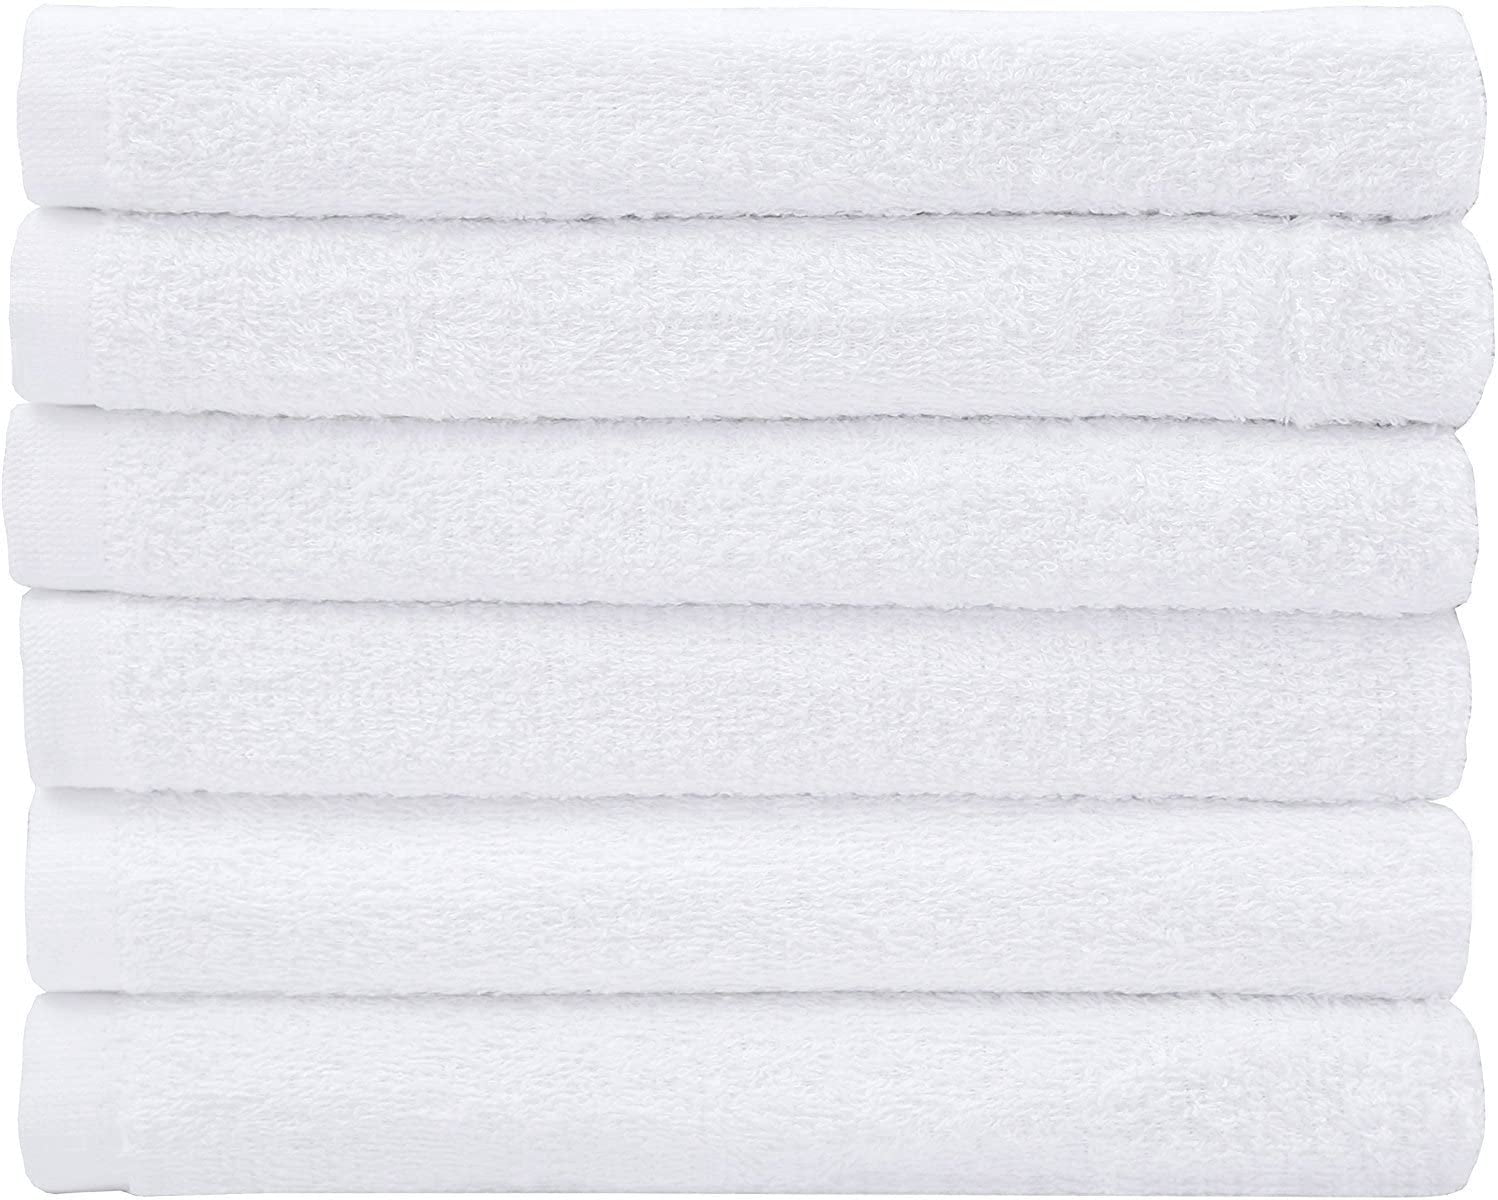 Utopia Towels – Towels Set, White – MUSHNA INC